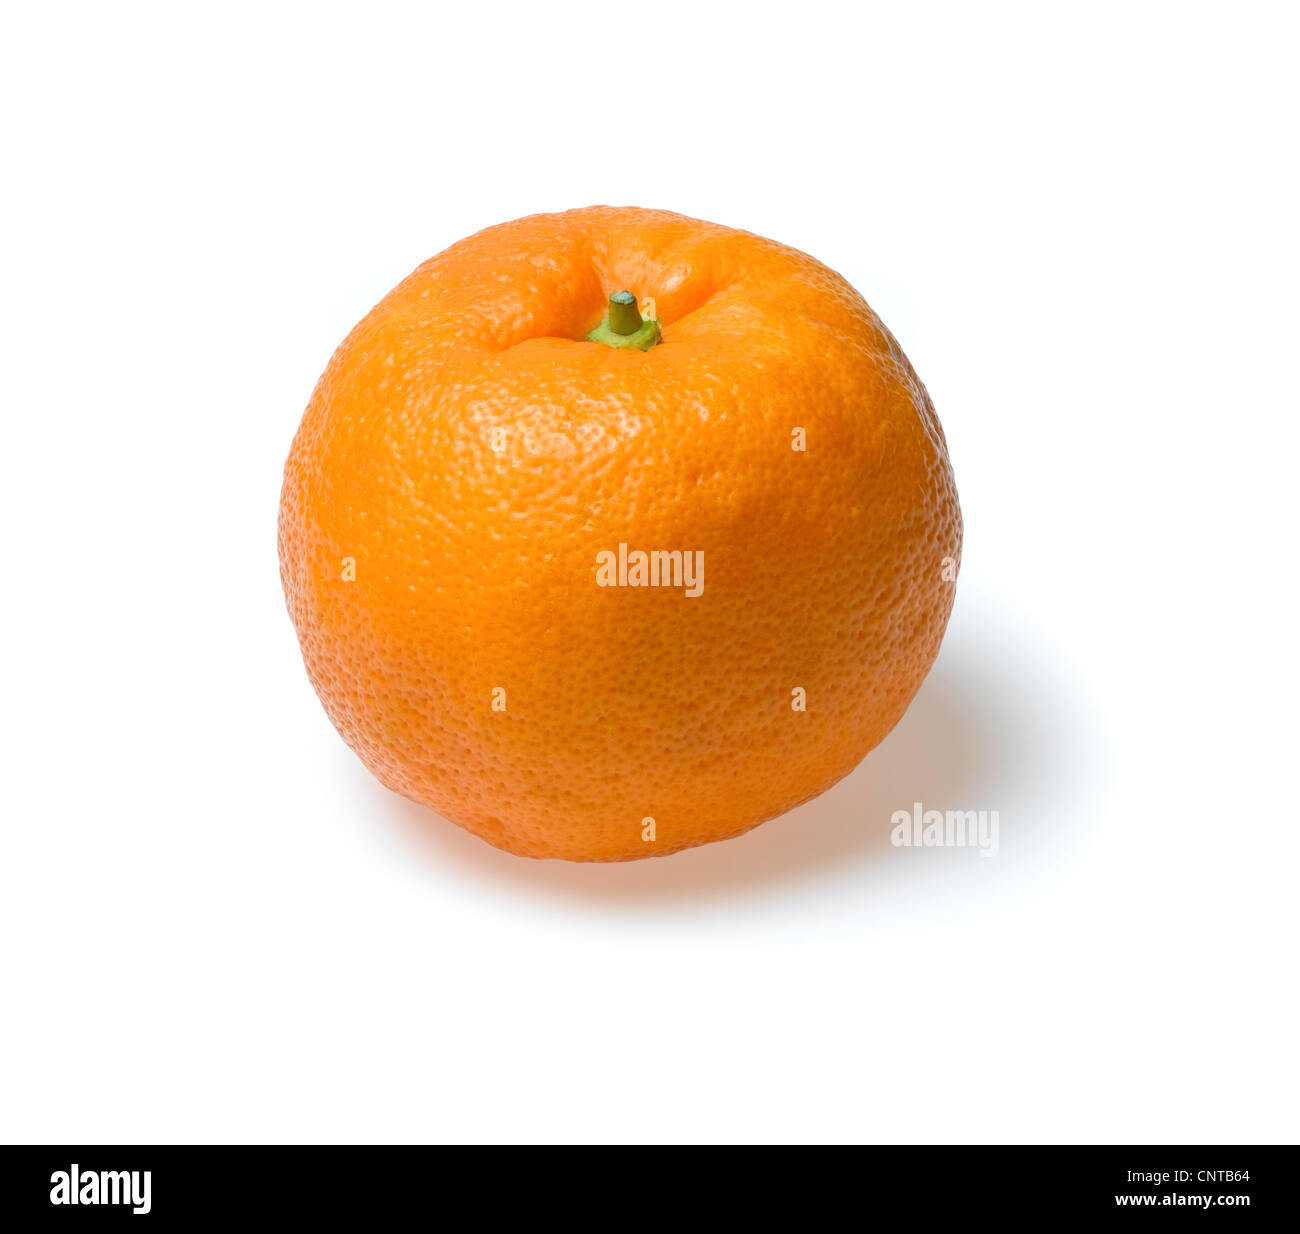 seville oranges Stock Photo